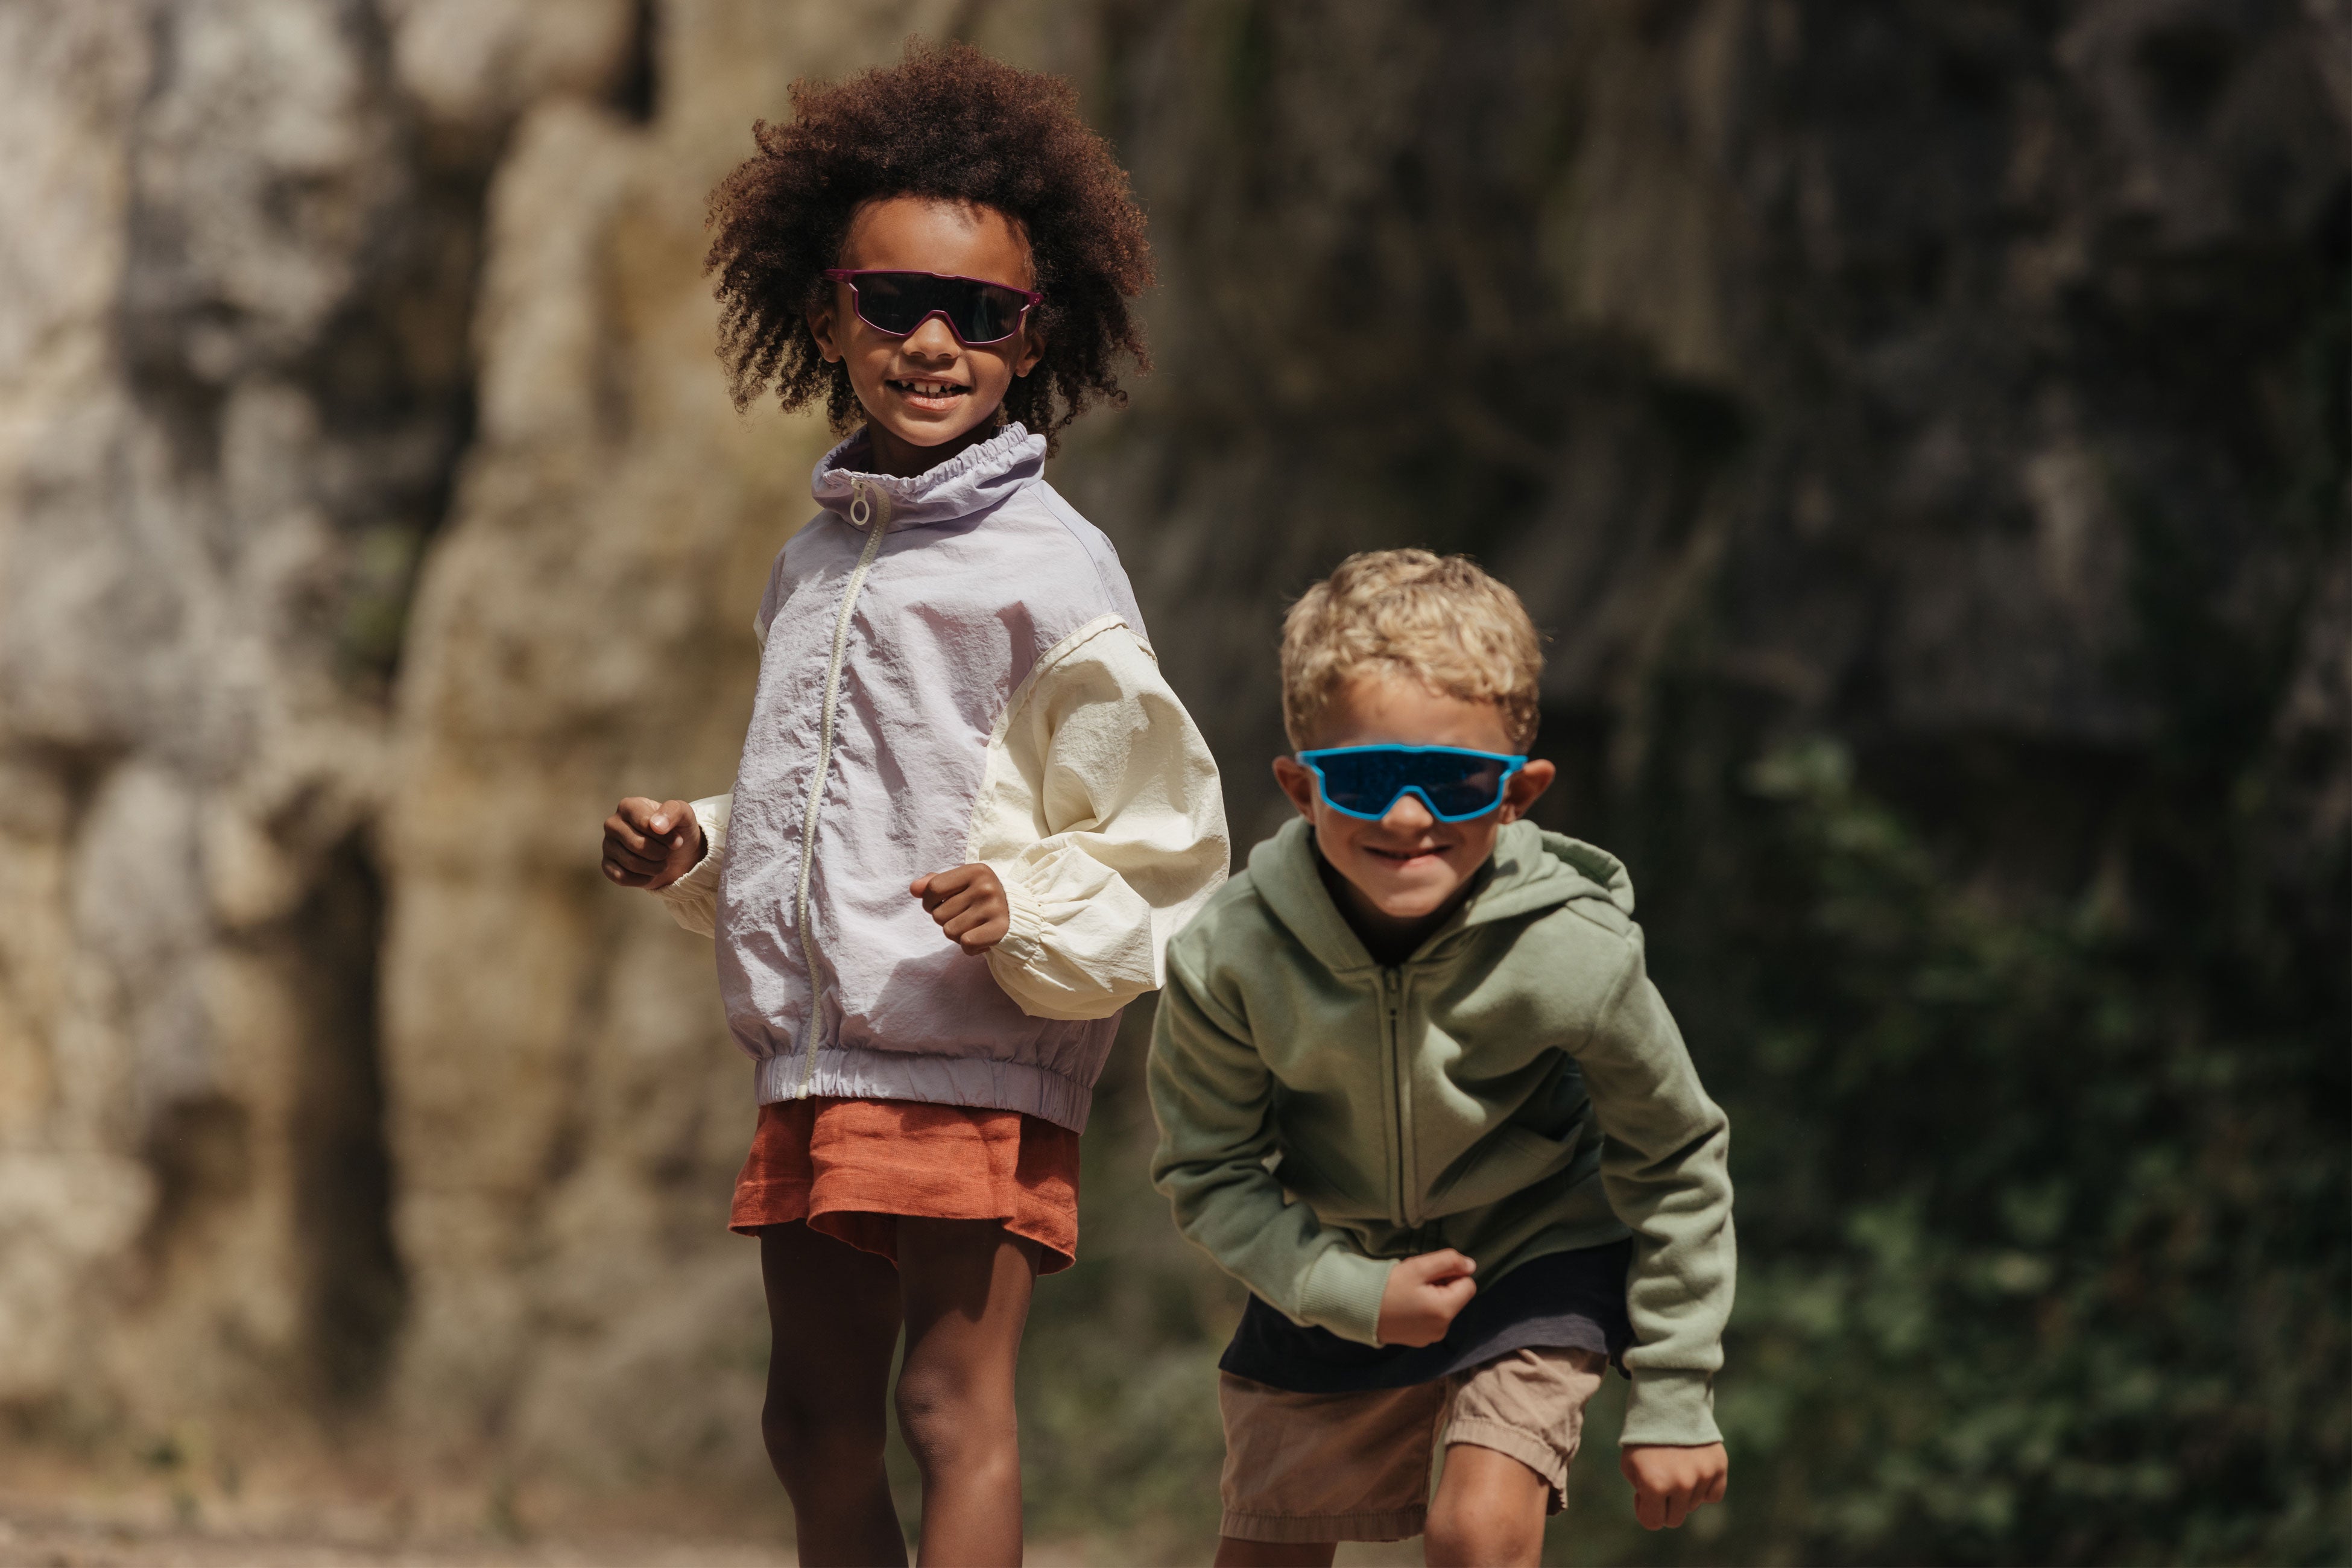 Two children having fun in their Julbo sunglasses